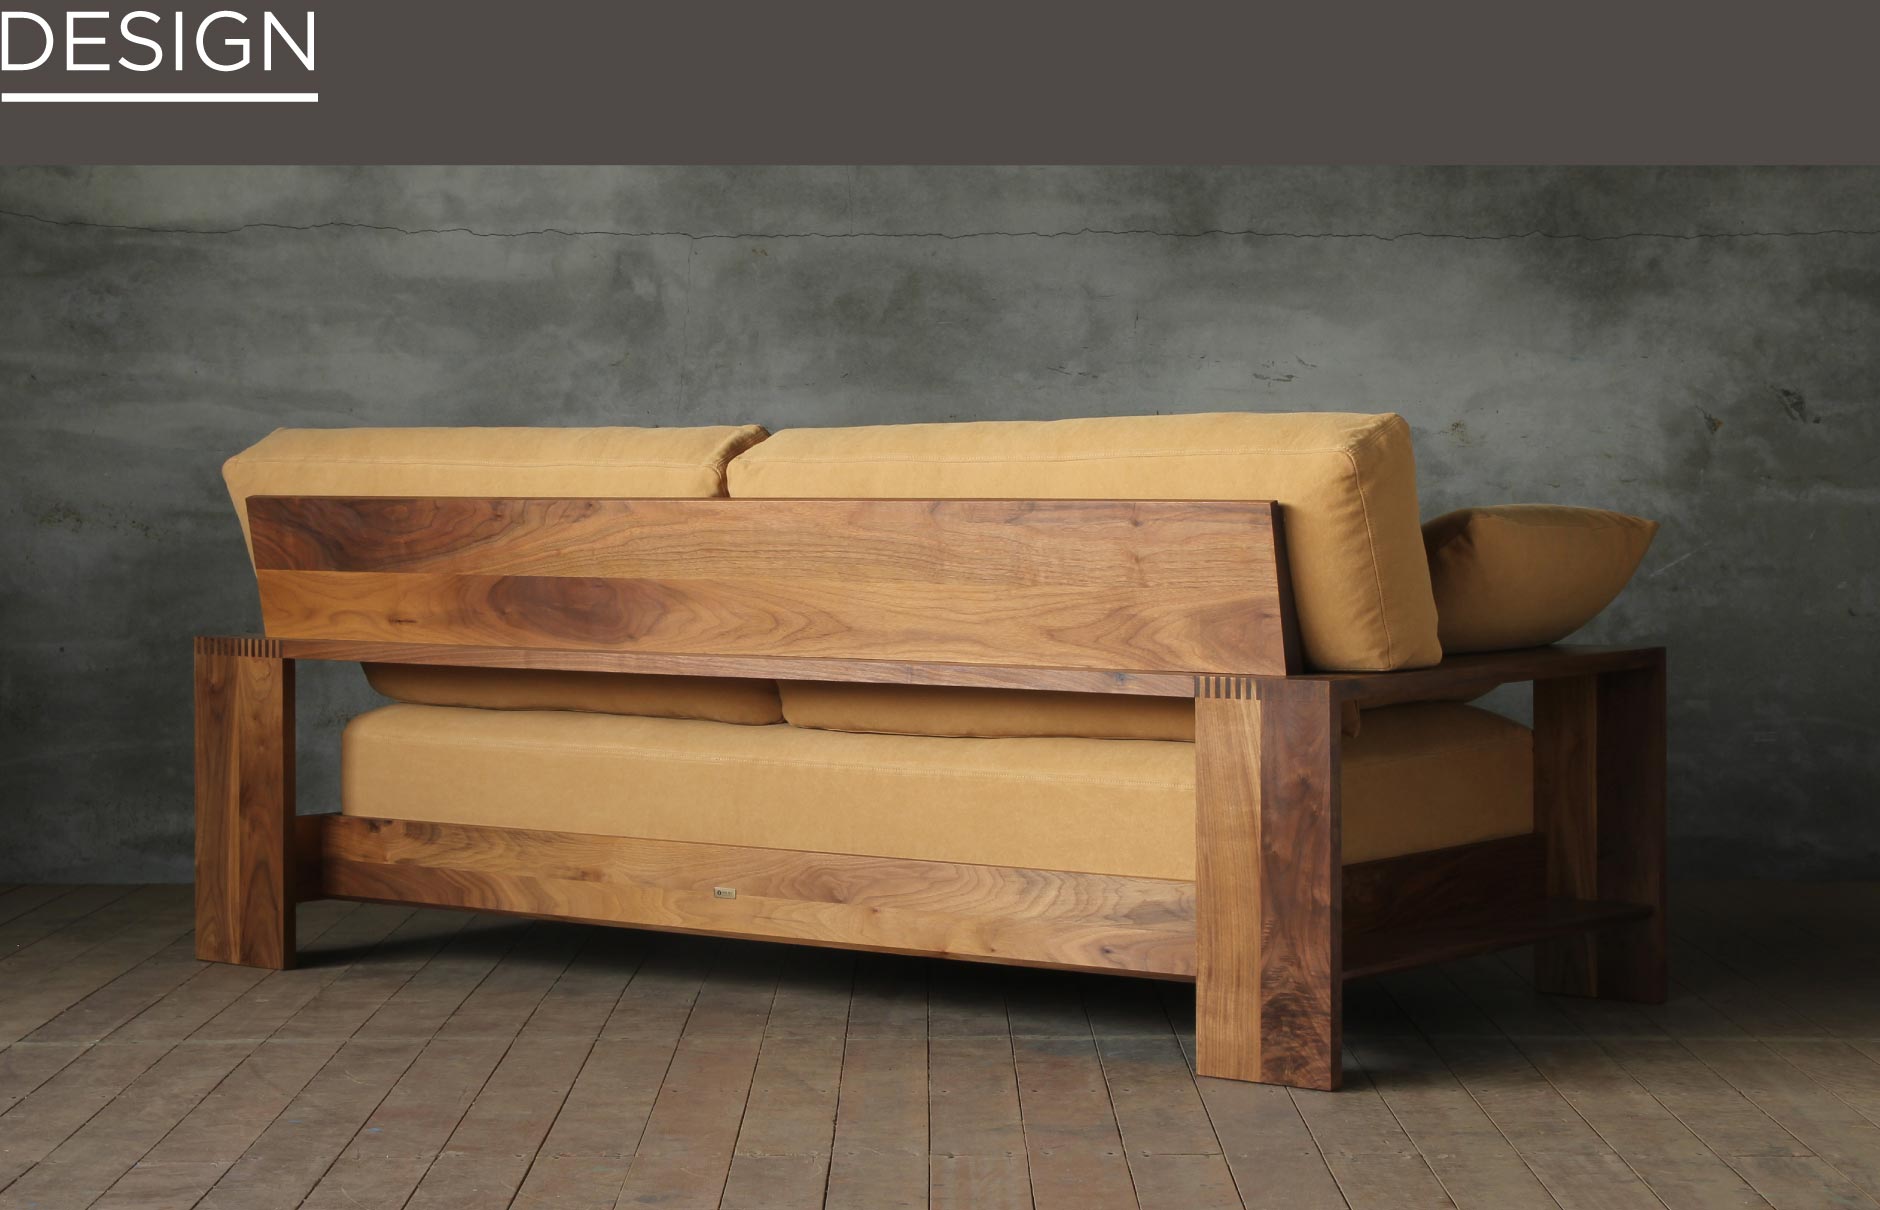 SOLID福岡の家具の中でも、無垢材を贅沢に使用し、背クッション座クッションは柔らかさと反発性を兼ね備え快適にご使用いただけるソファです。